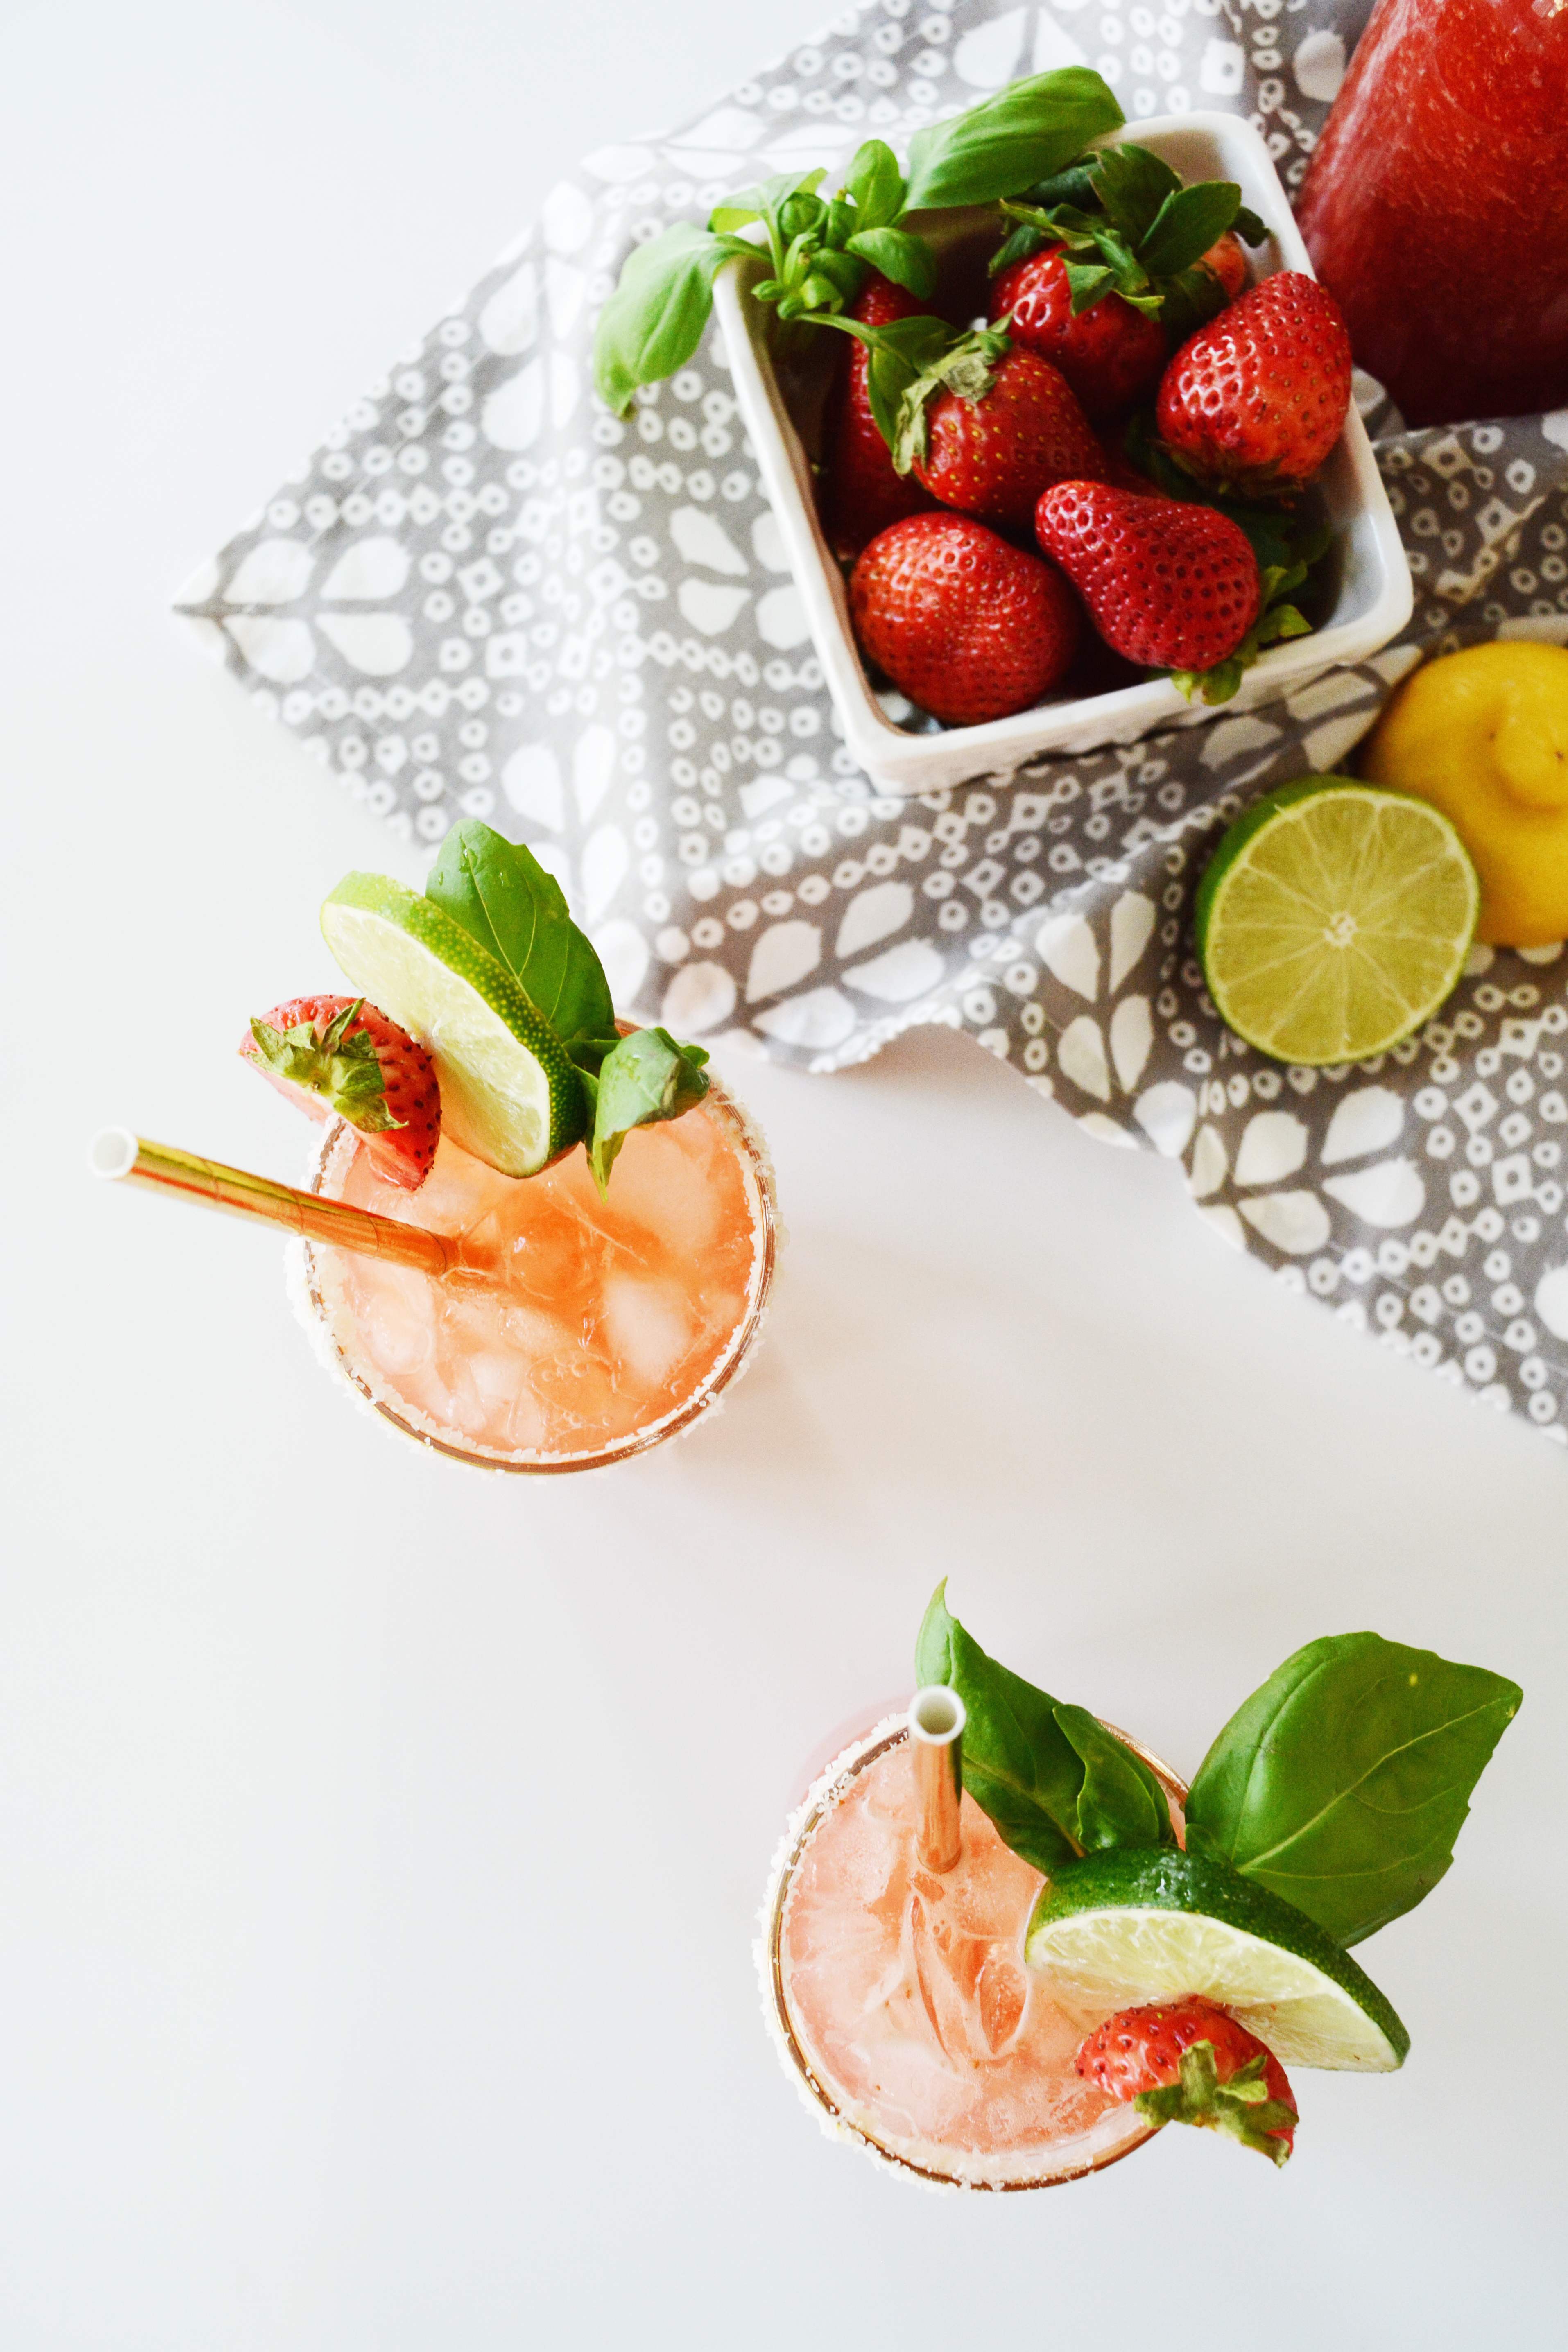 Strawberry Basil Mock-Margarita